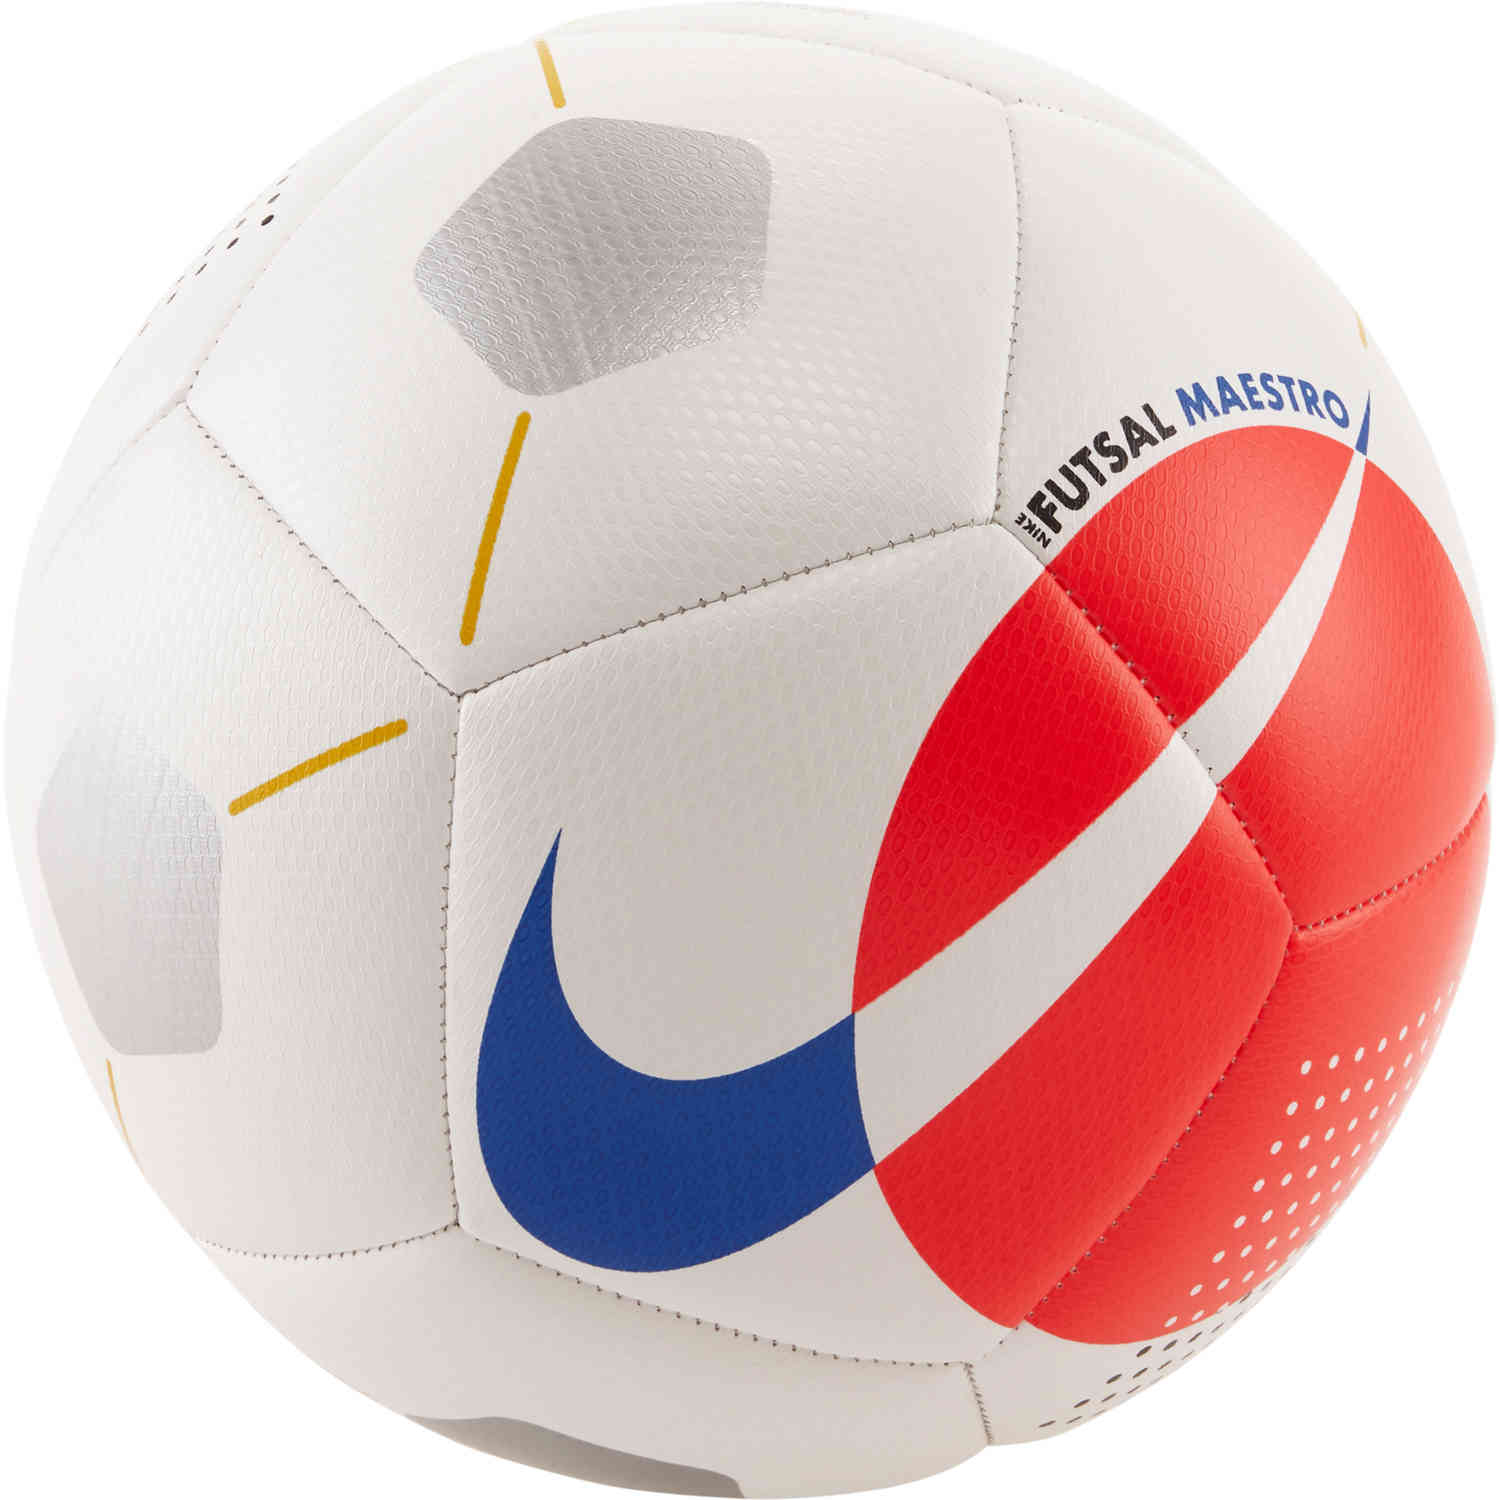 Nike Maestro Futsal Ball - White/Bright 